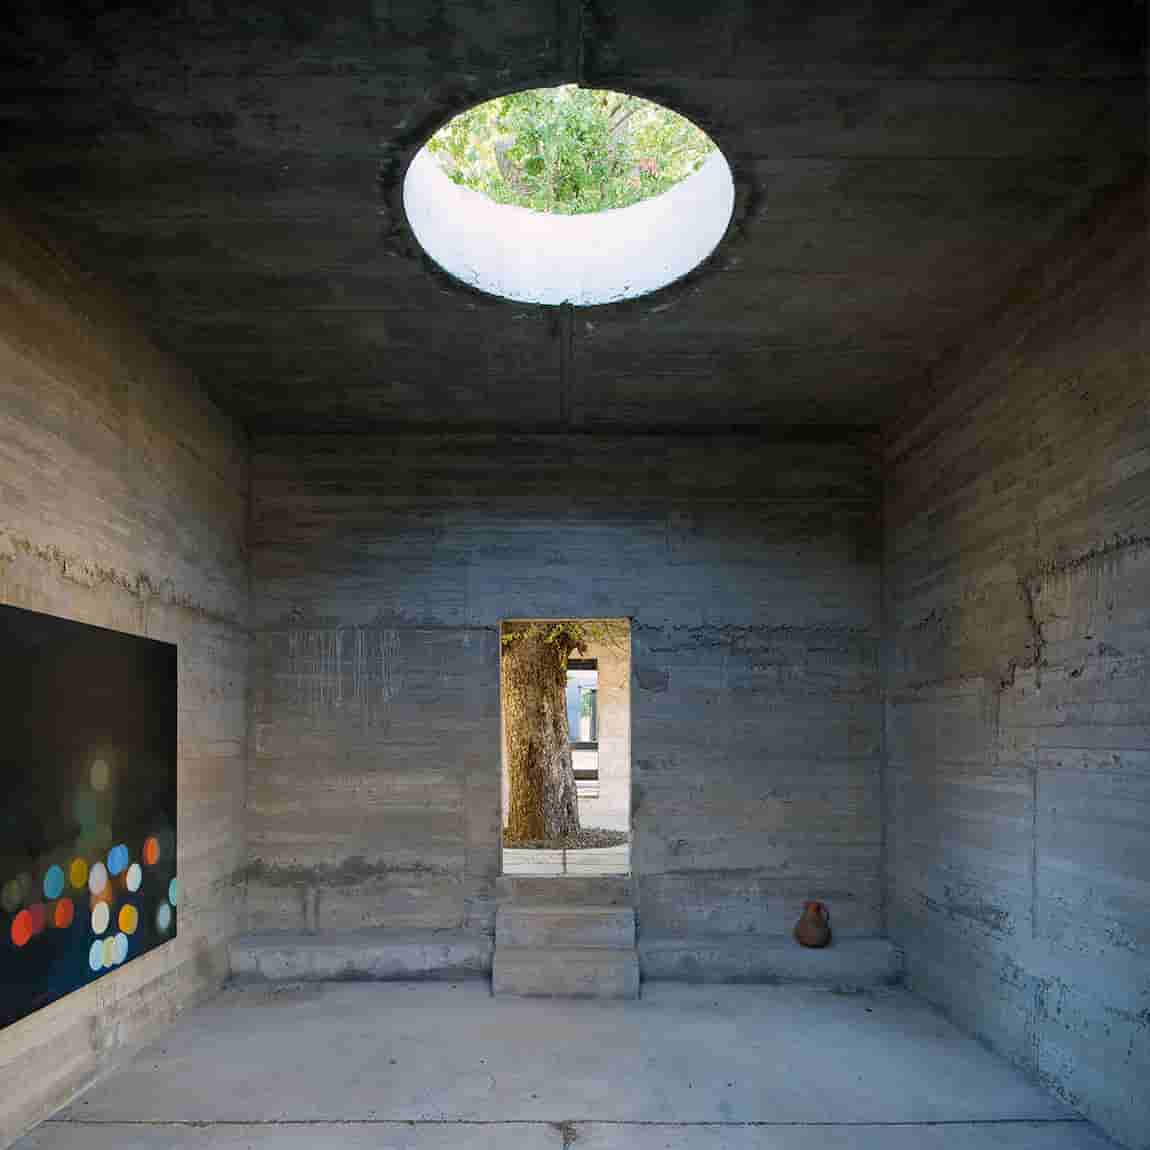 Luna House: Pezo Von Ellrichshausen's Home/Studio In The Chilean Countryside